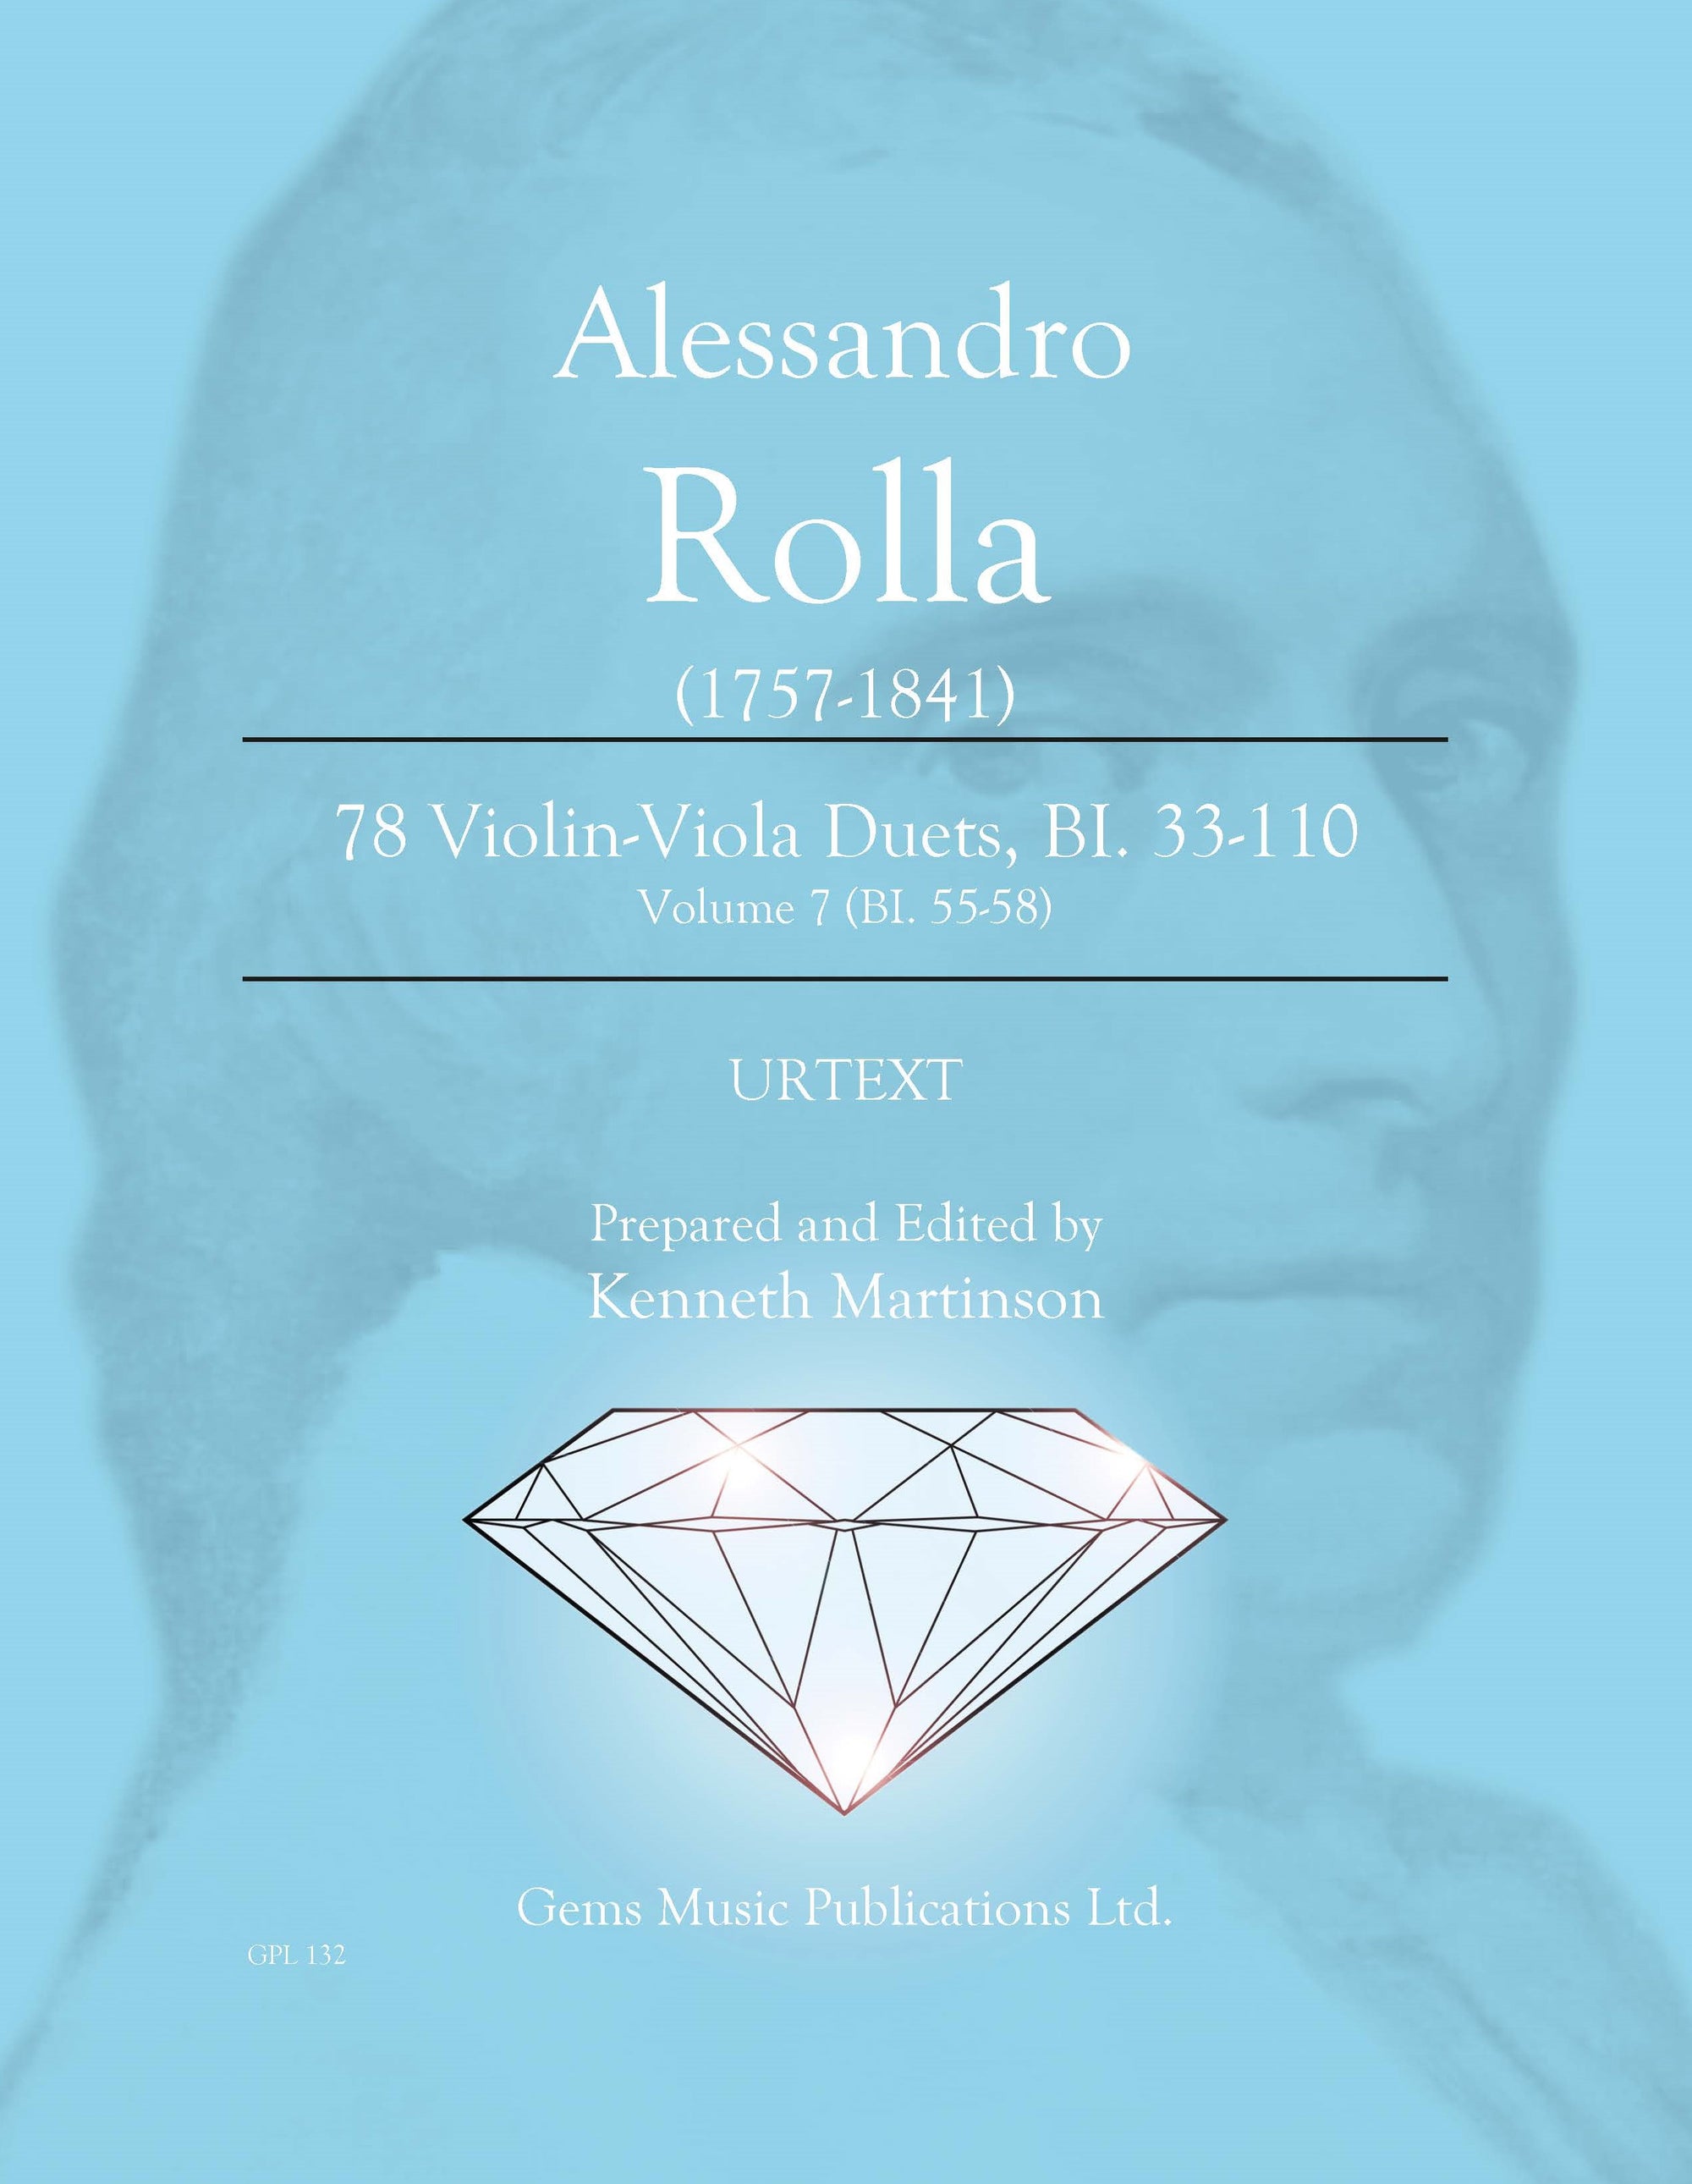 Rolla: Violin-Viola Duets - Volume 7 (BI. 55-58)